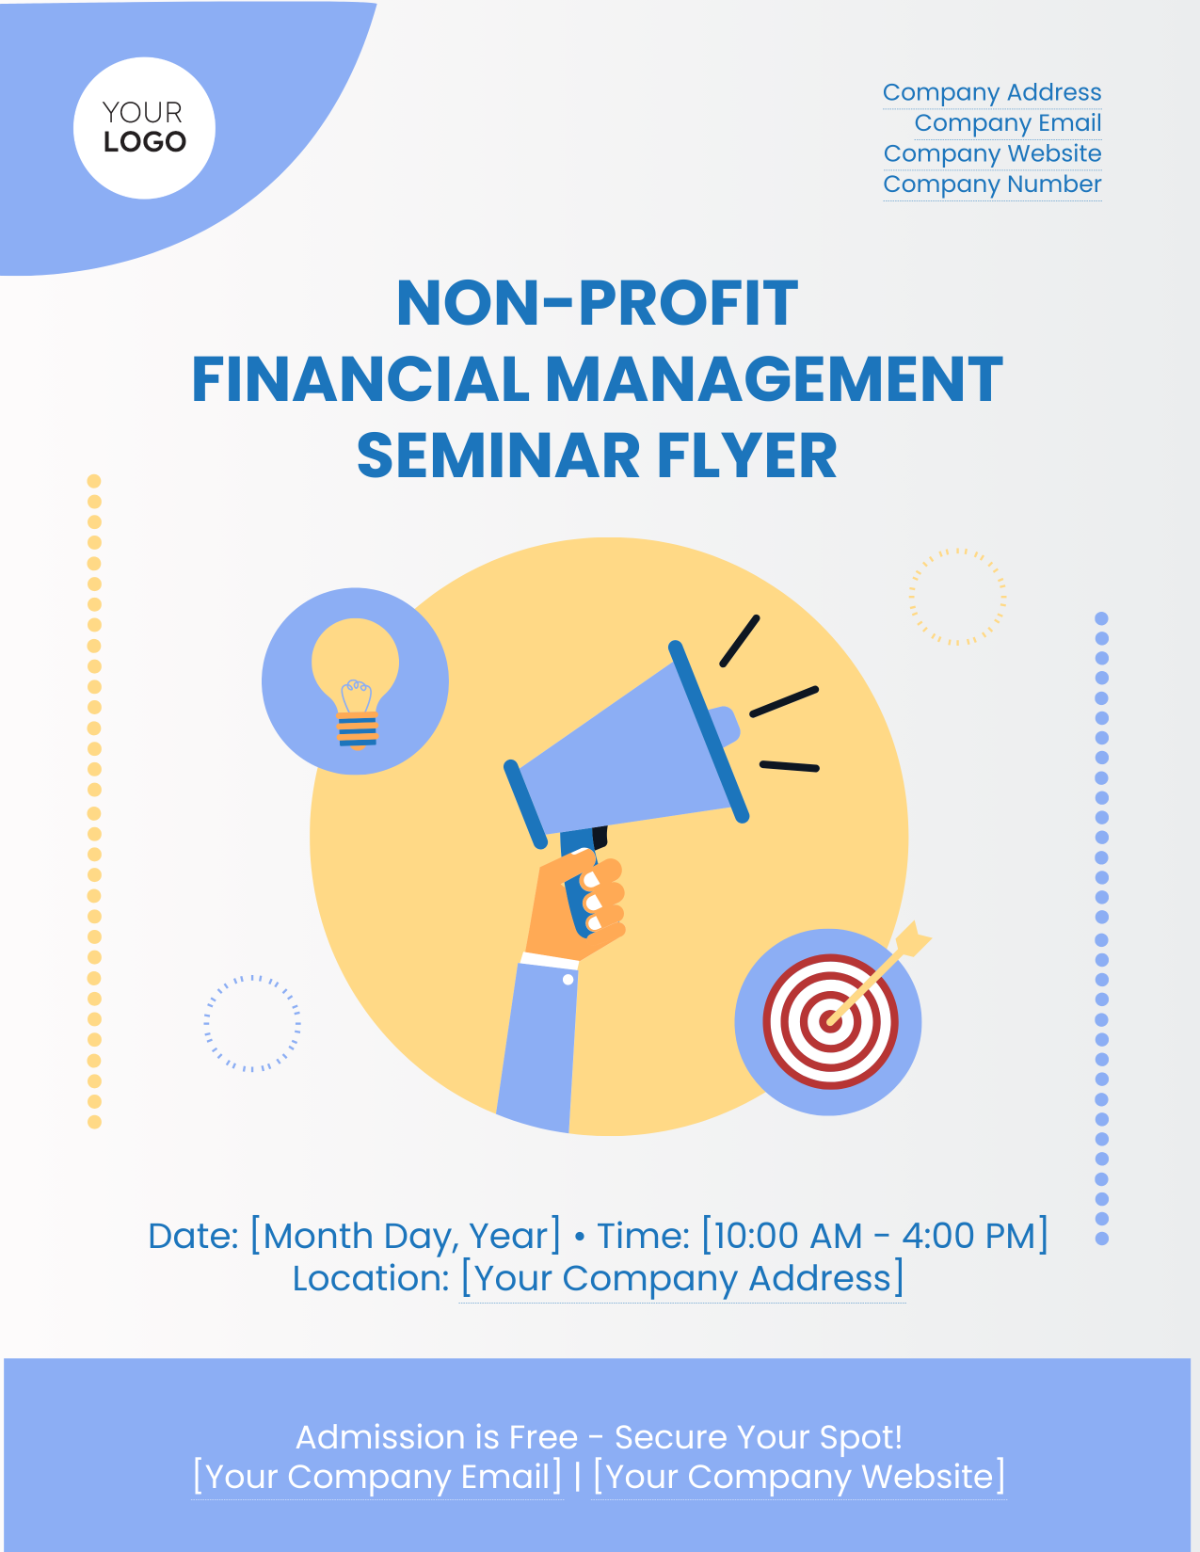 Non-Profit Financial Management Seminar Flyer